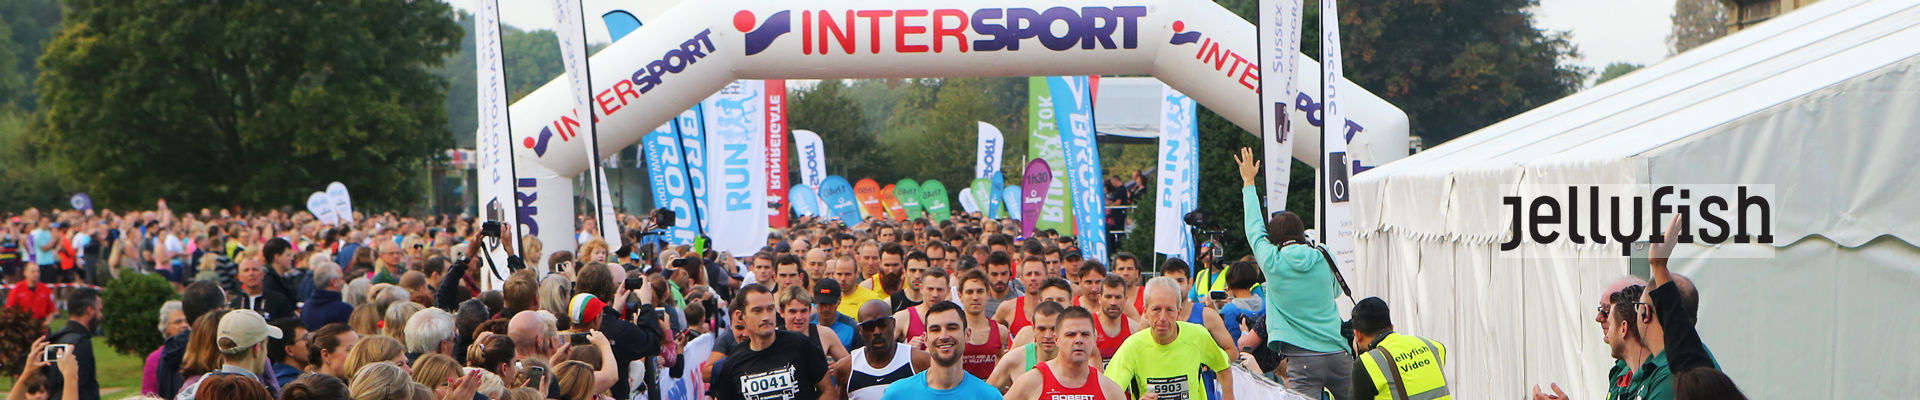 Intersport Run Reigate 2017